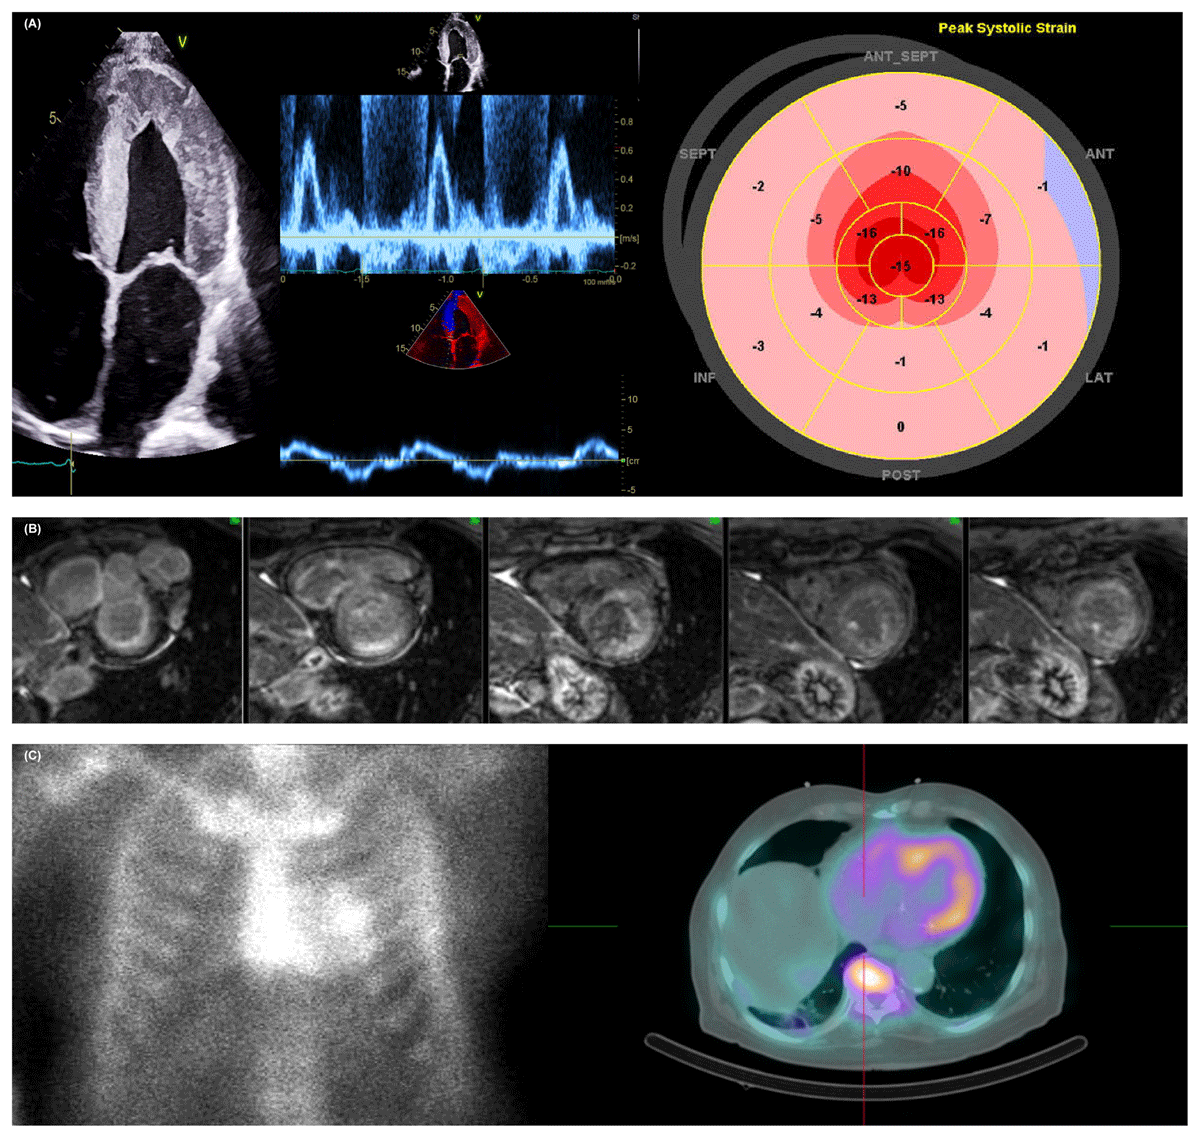 Nuclear and Multimodality Imaging: Cardiac Amyloidosis - CardioNerds